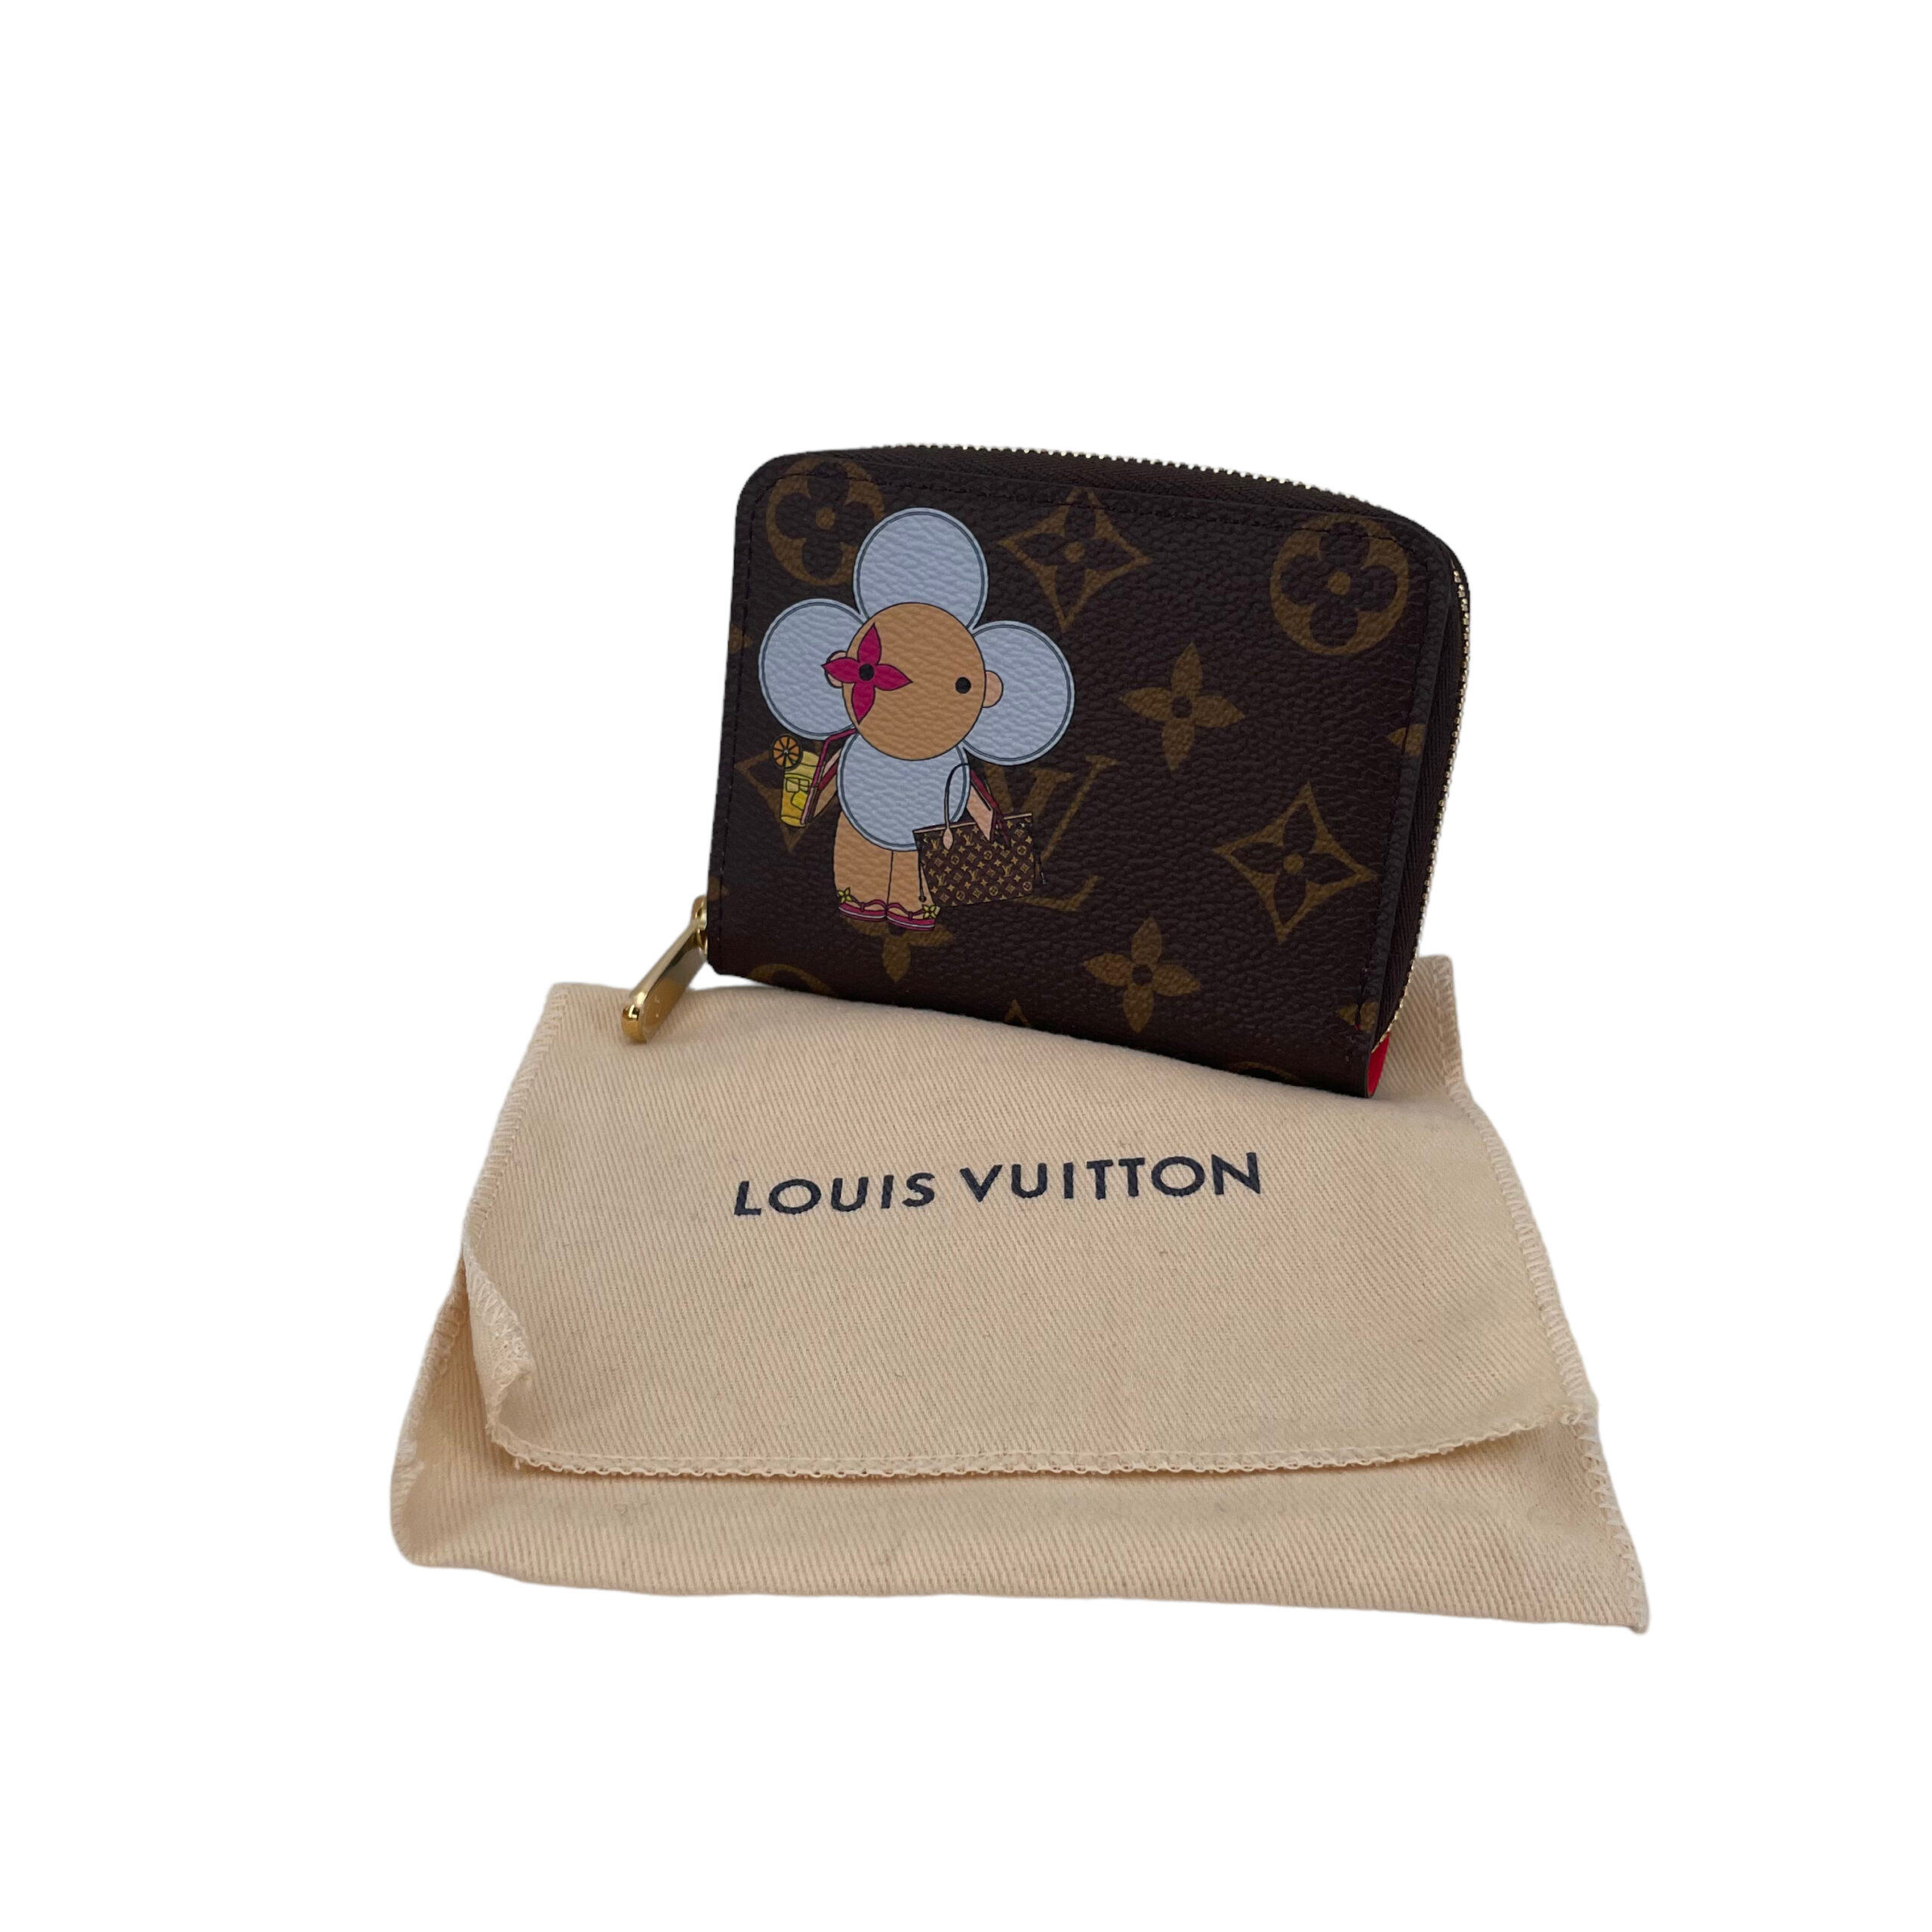 Louis Vuitton's Vivienne reborn in 11 new forms